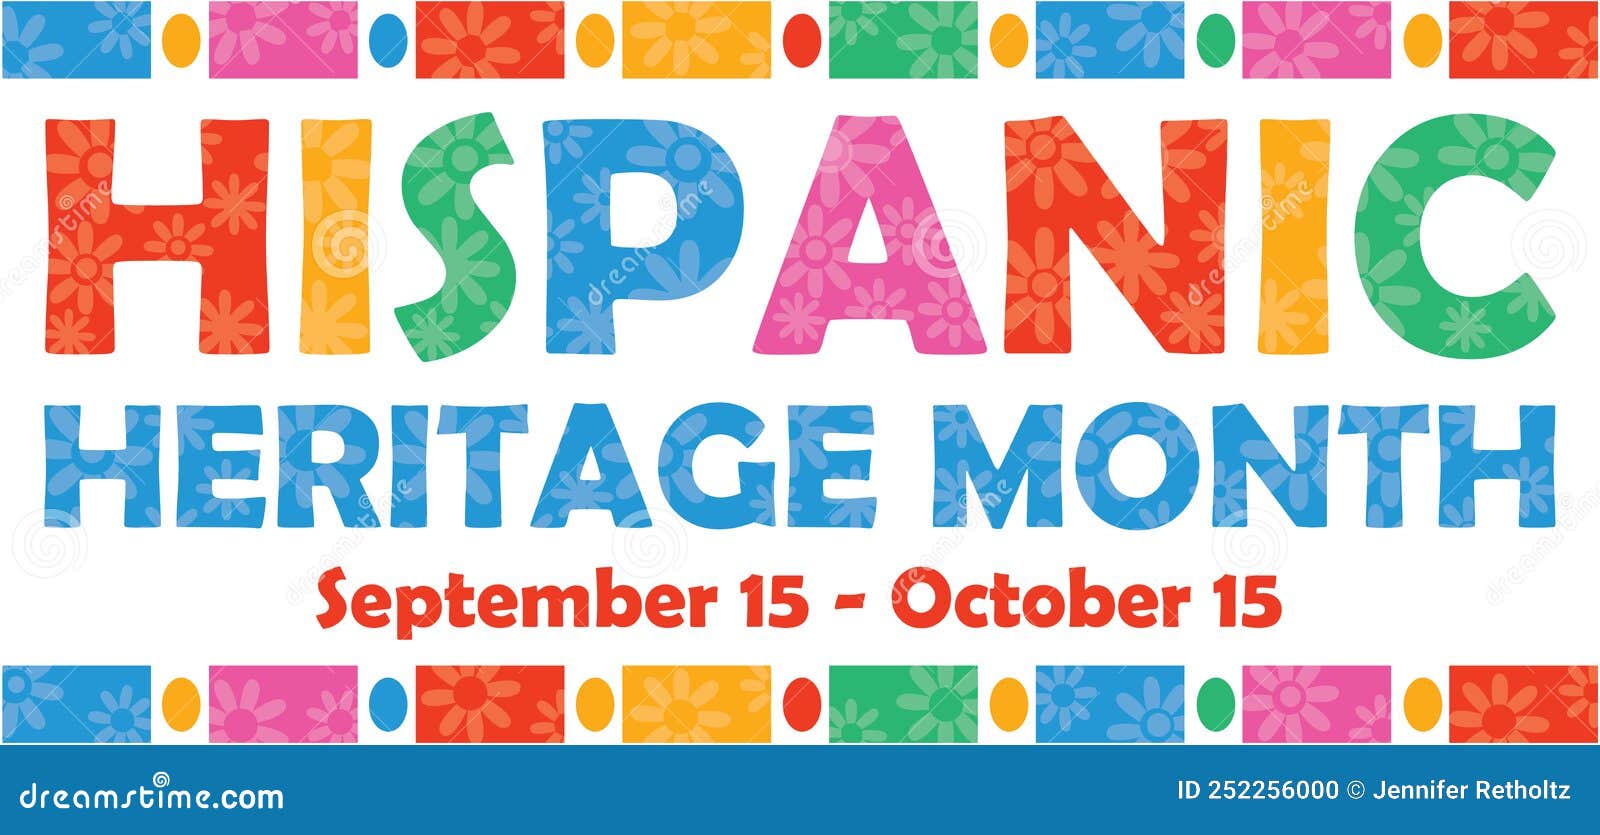 hispanic heritage month floral banner